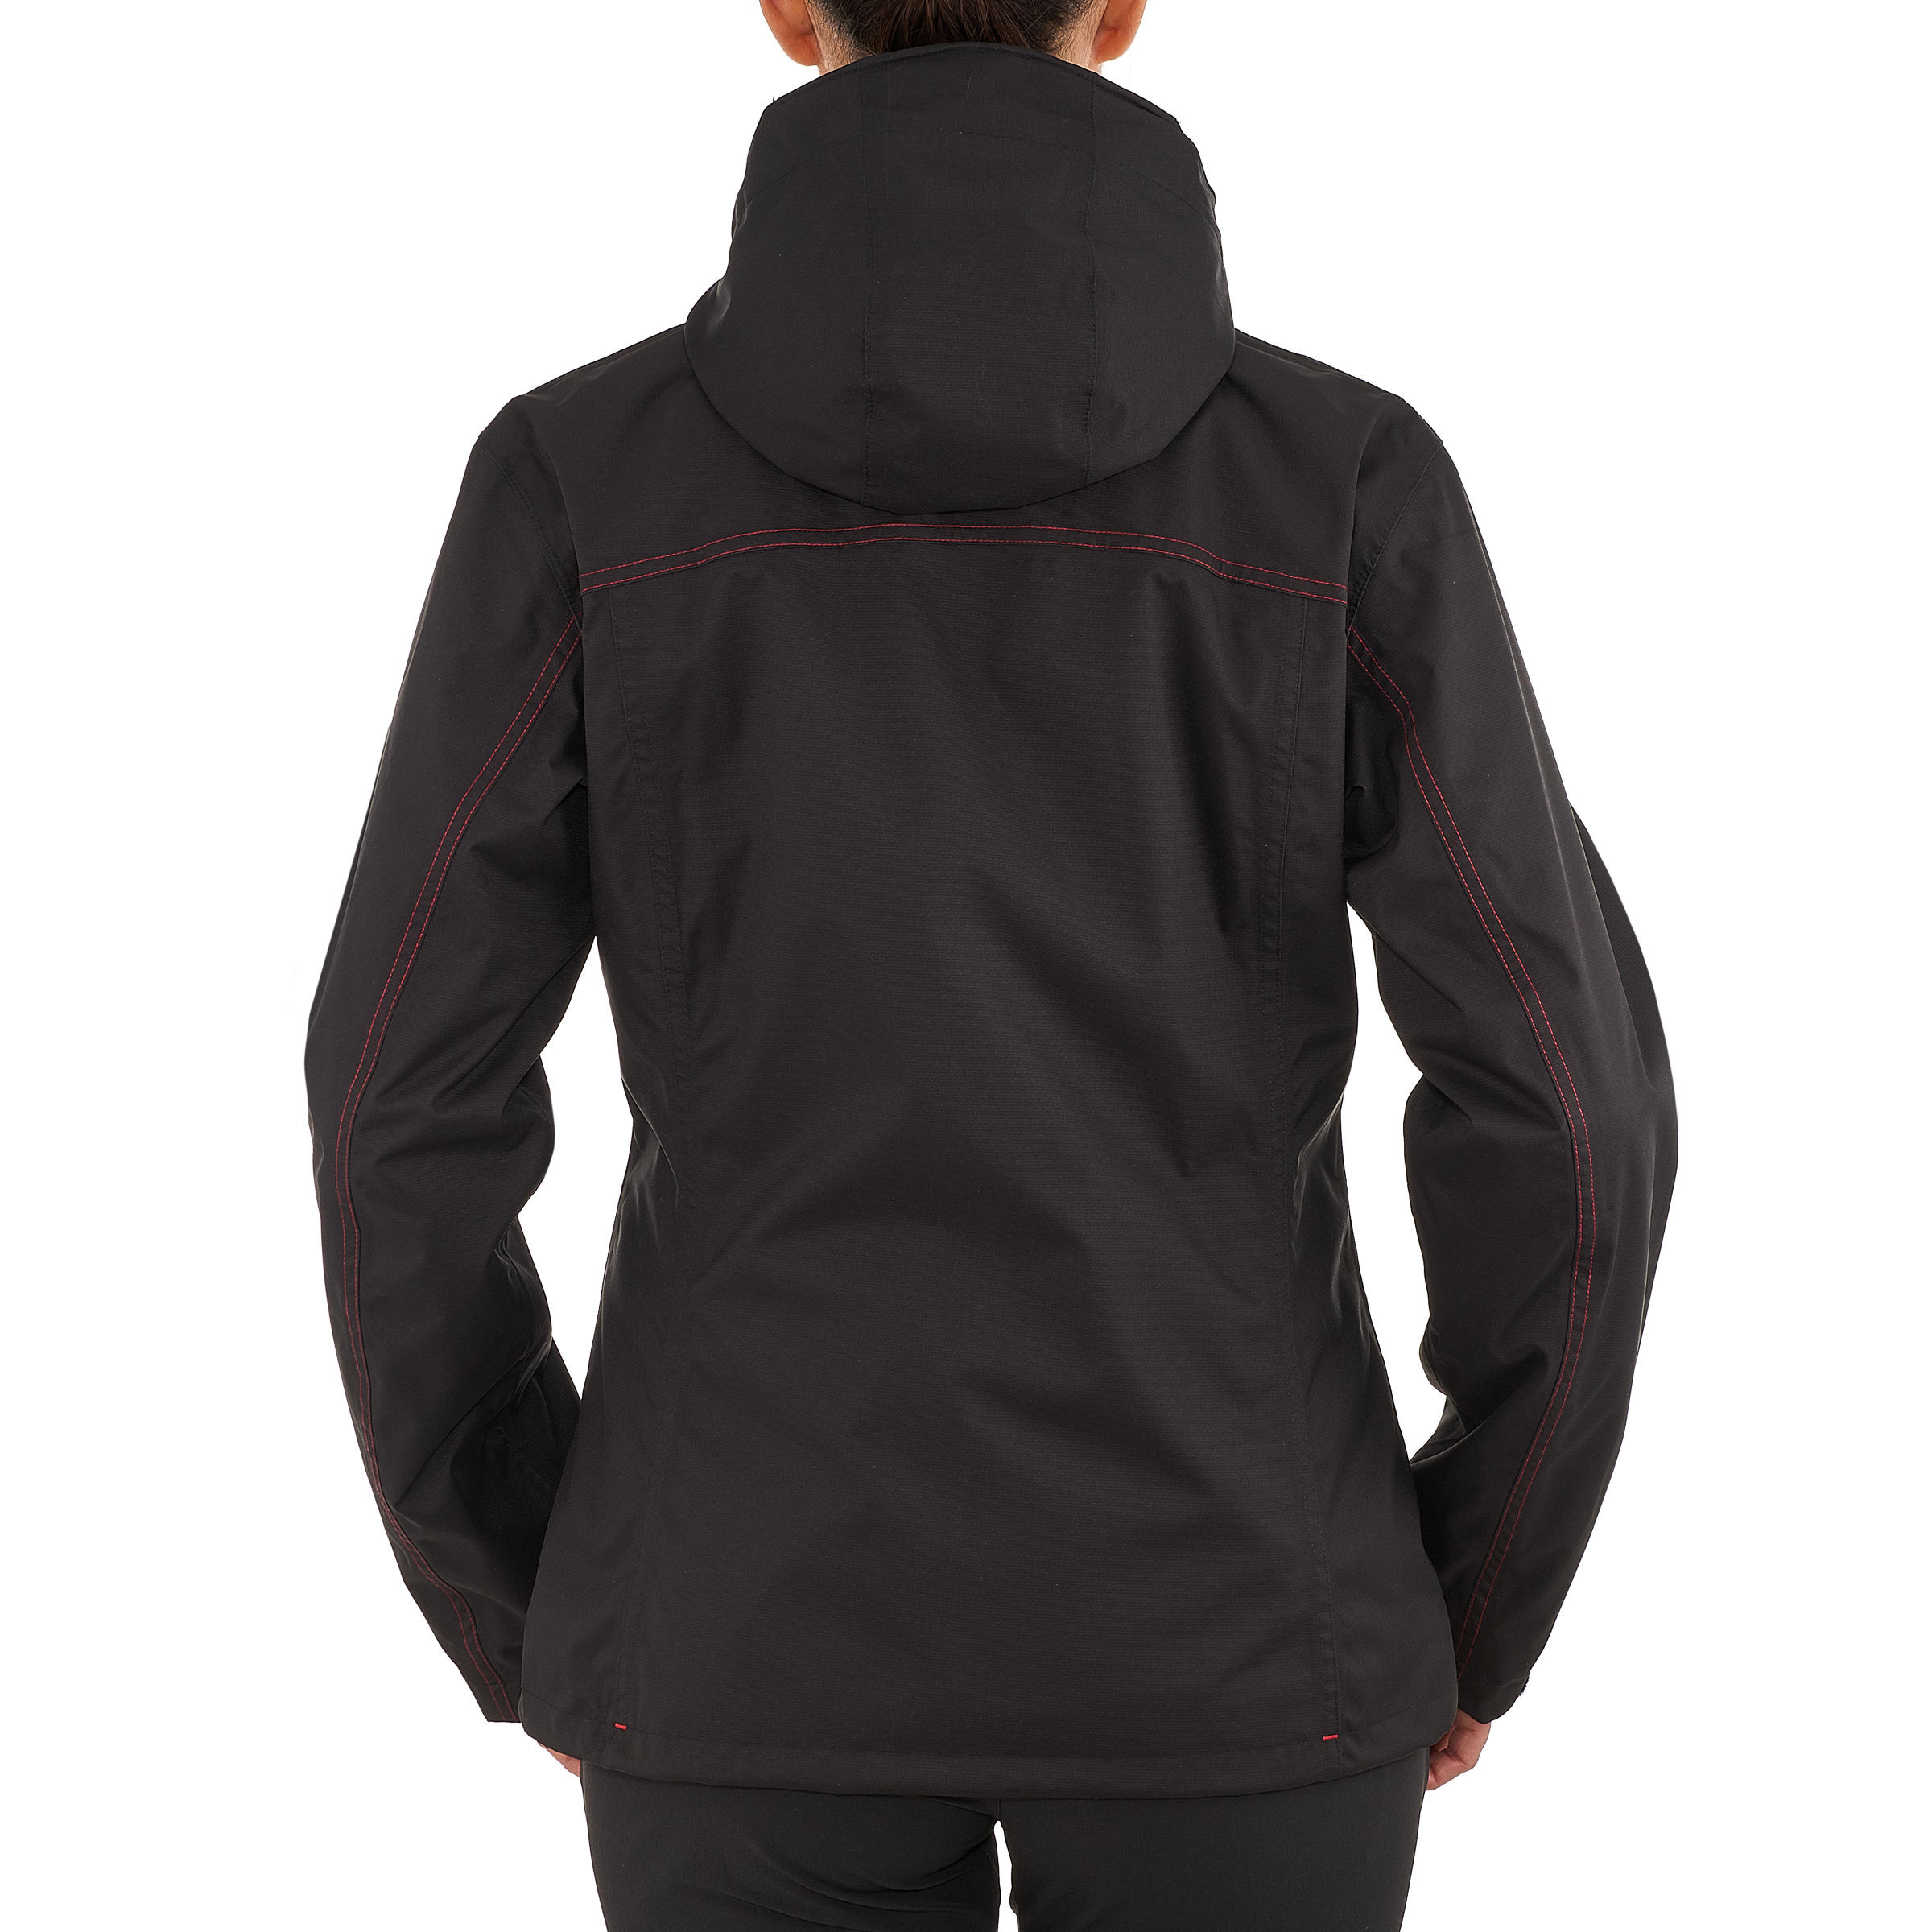 Rainwarm 100 Women's 3-in-1 Trekking Jacket - Black 6/26